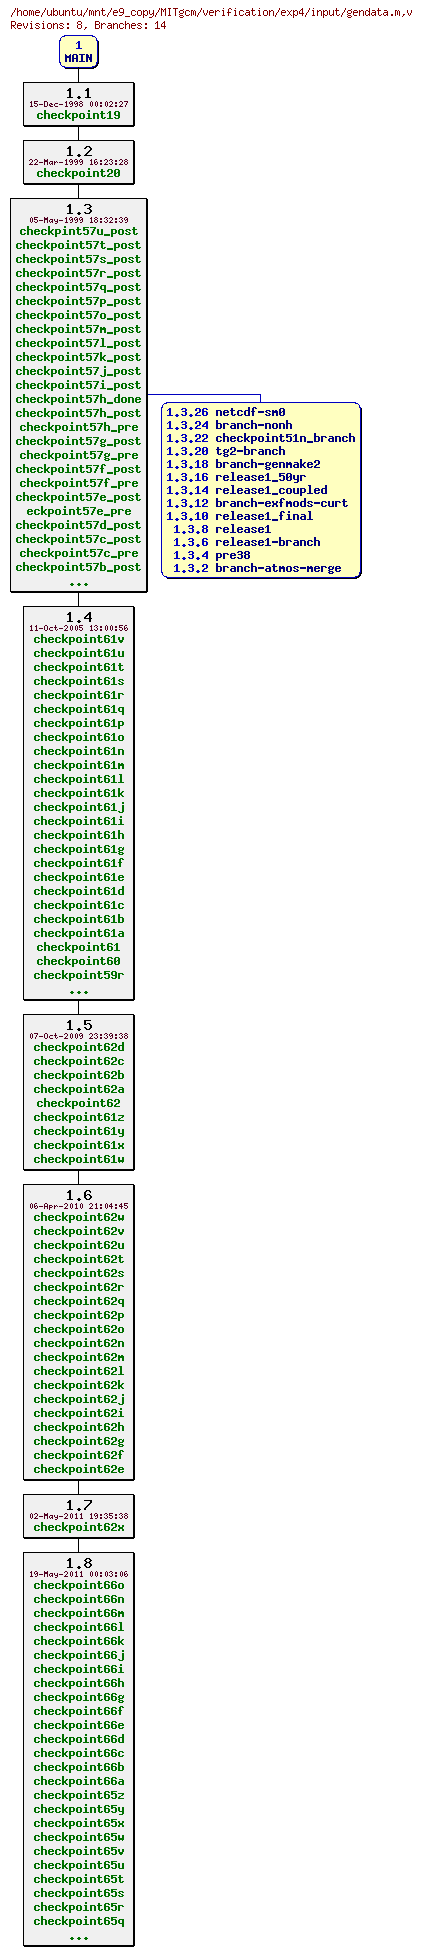 Revisions of MITgcm/verification/exp4/input/gendata.m